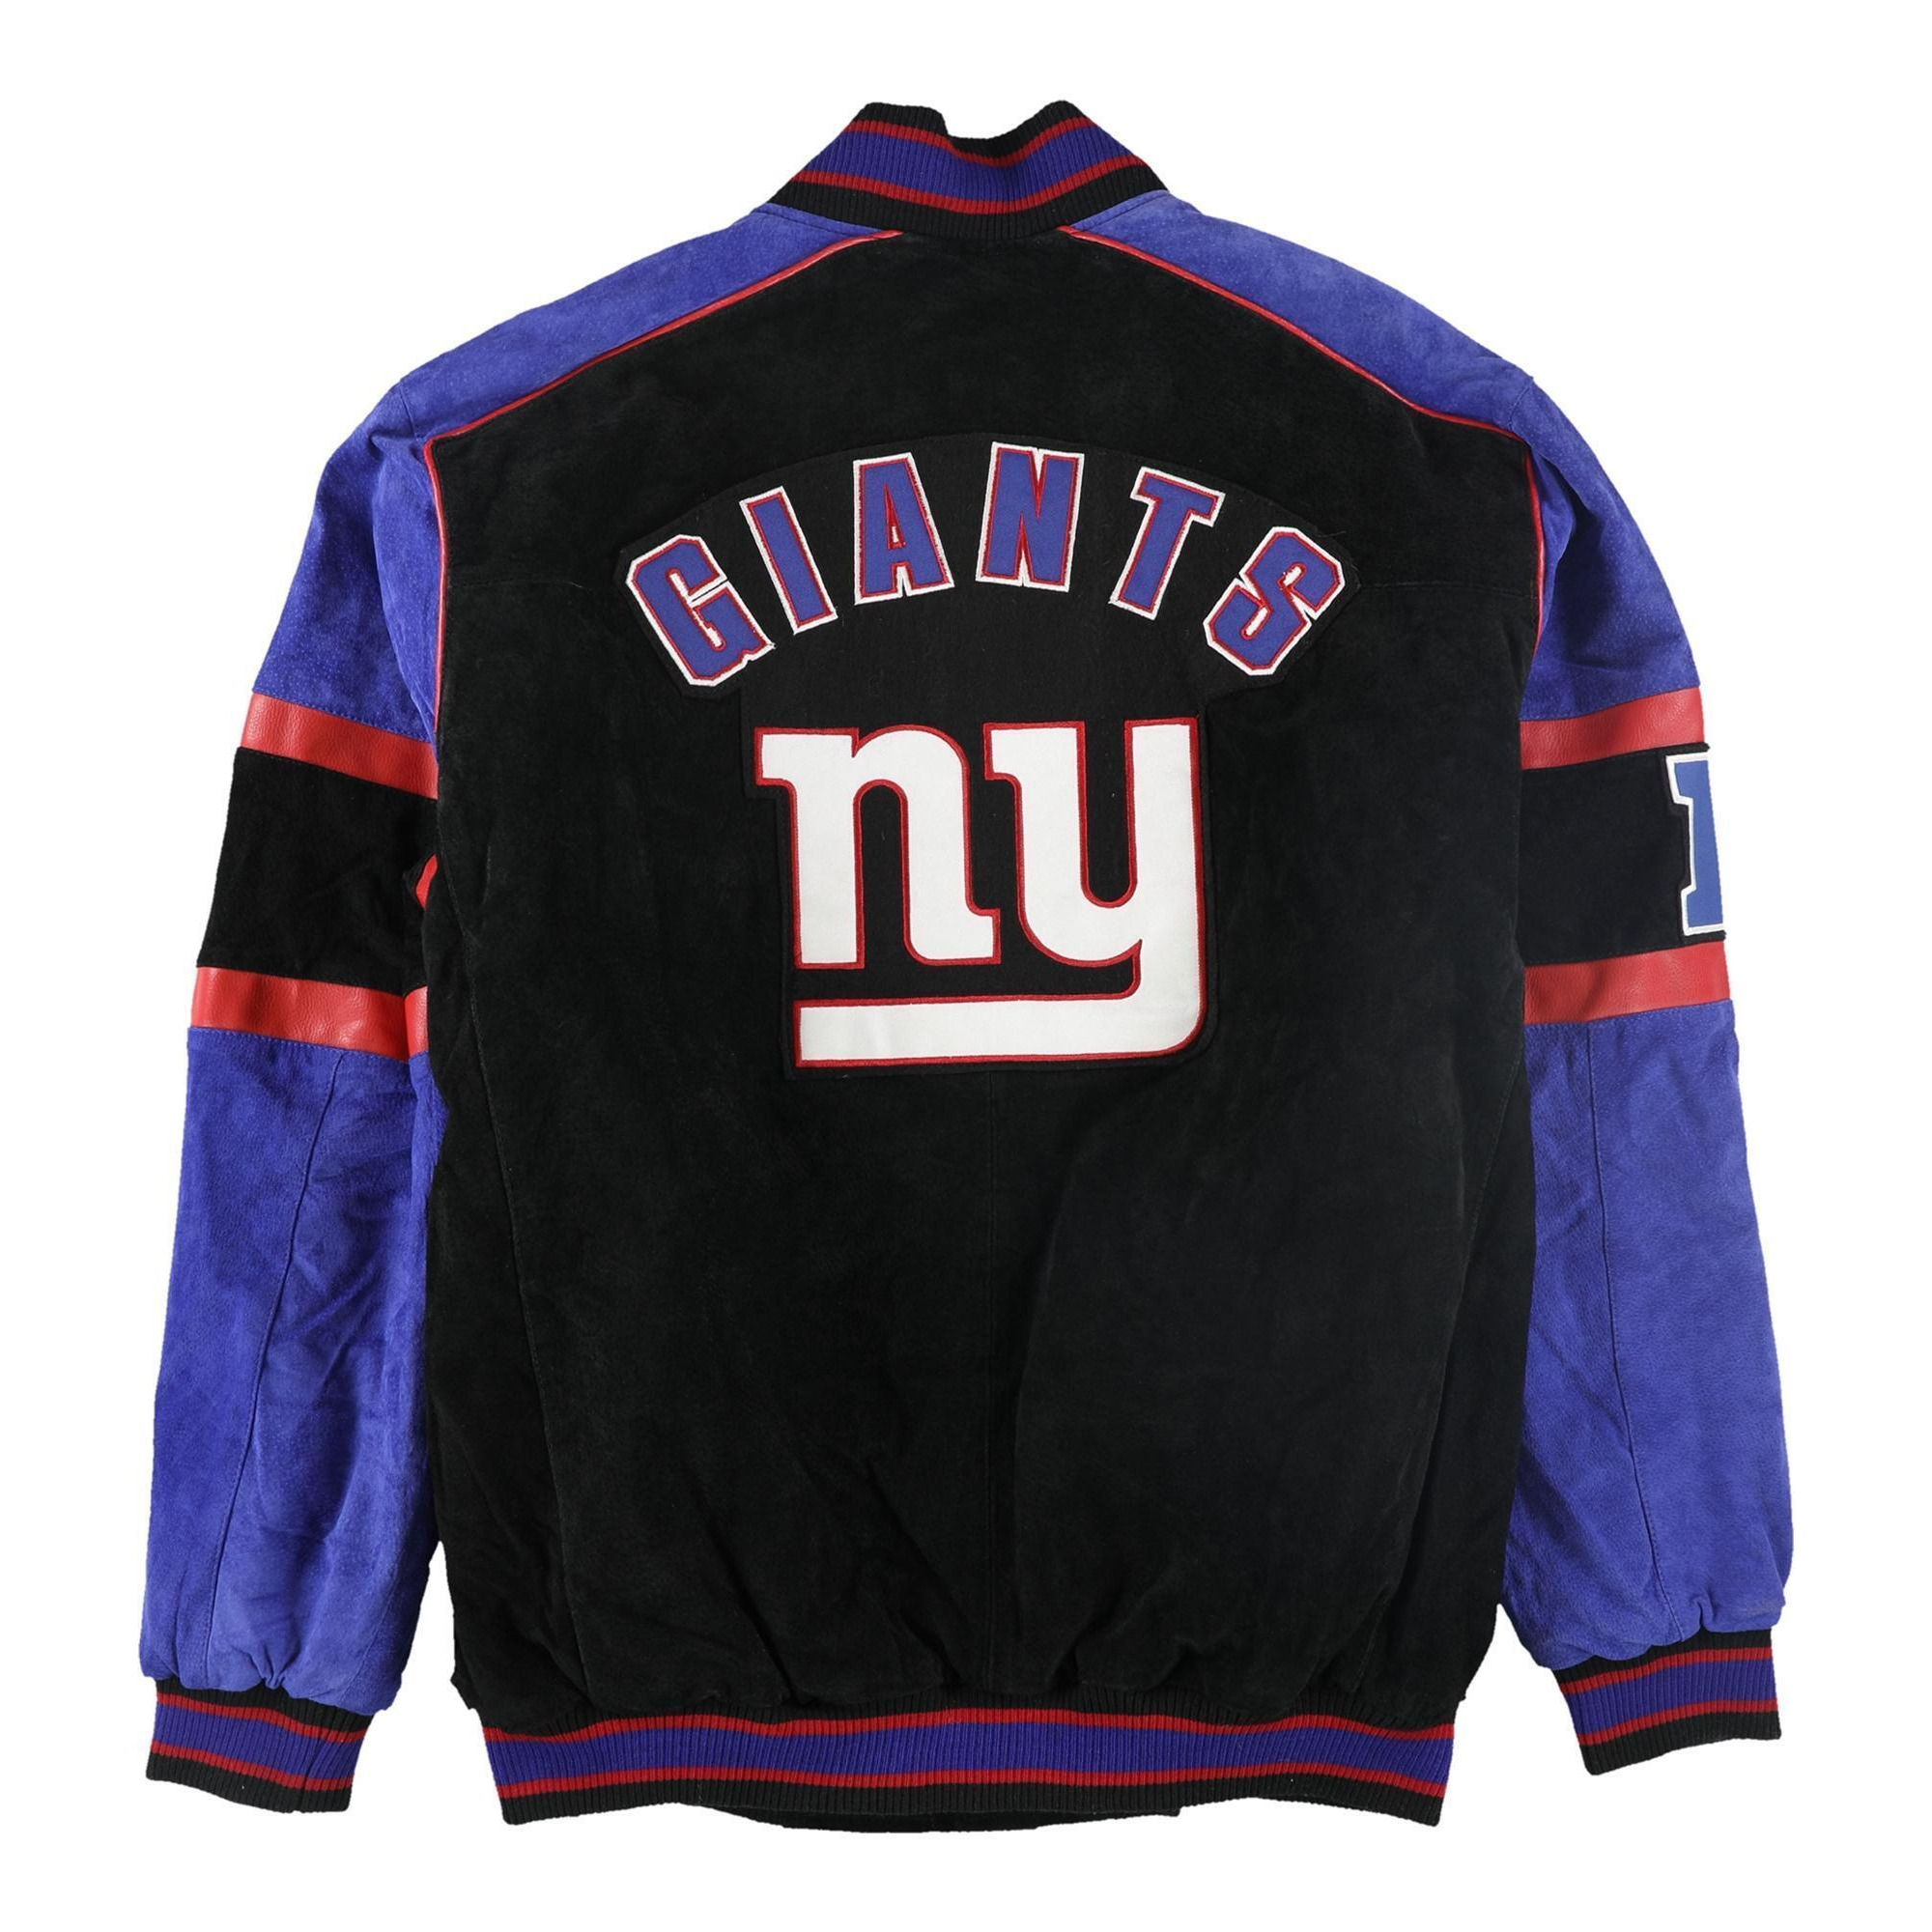 NFL Mens New York Giants Jacket, Style # LA400906 alternate image